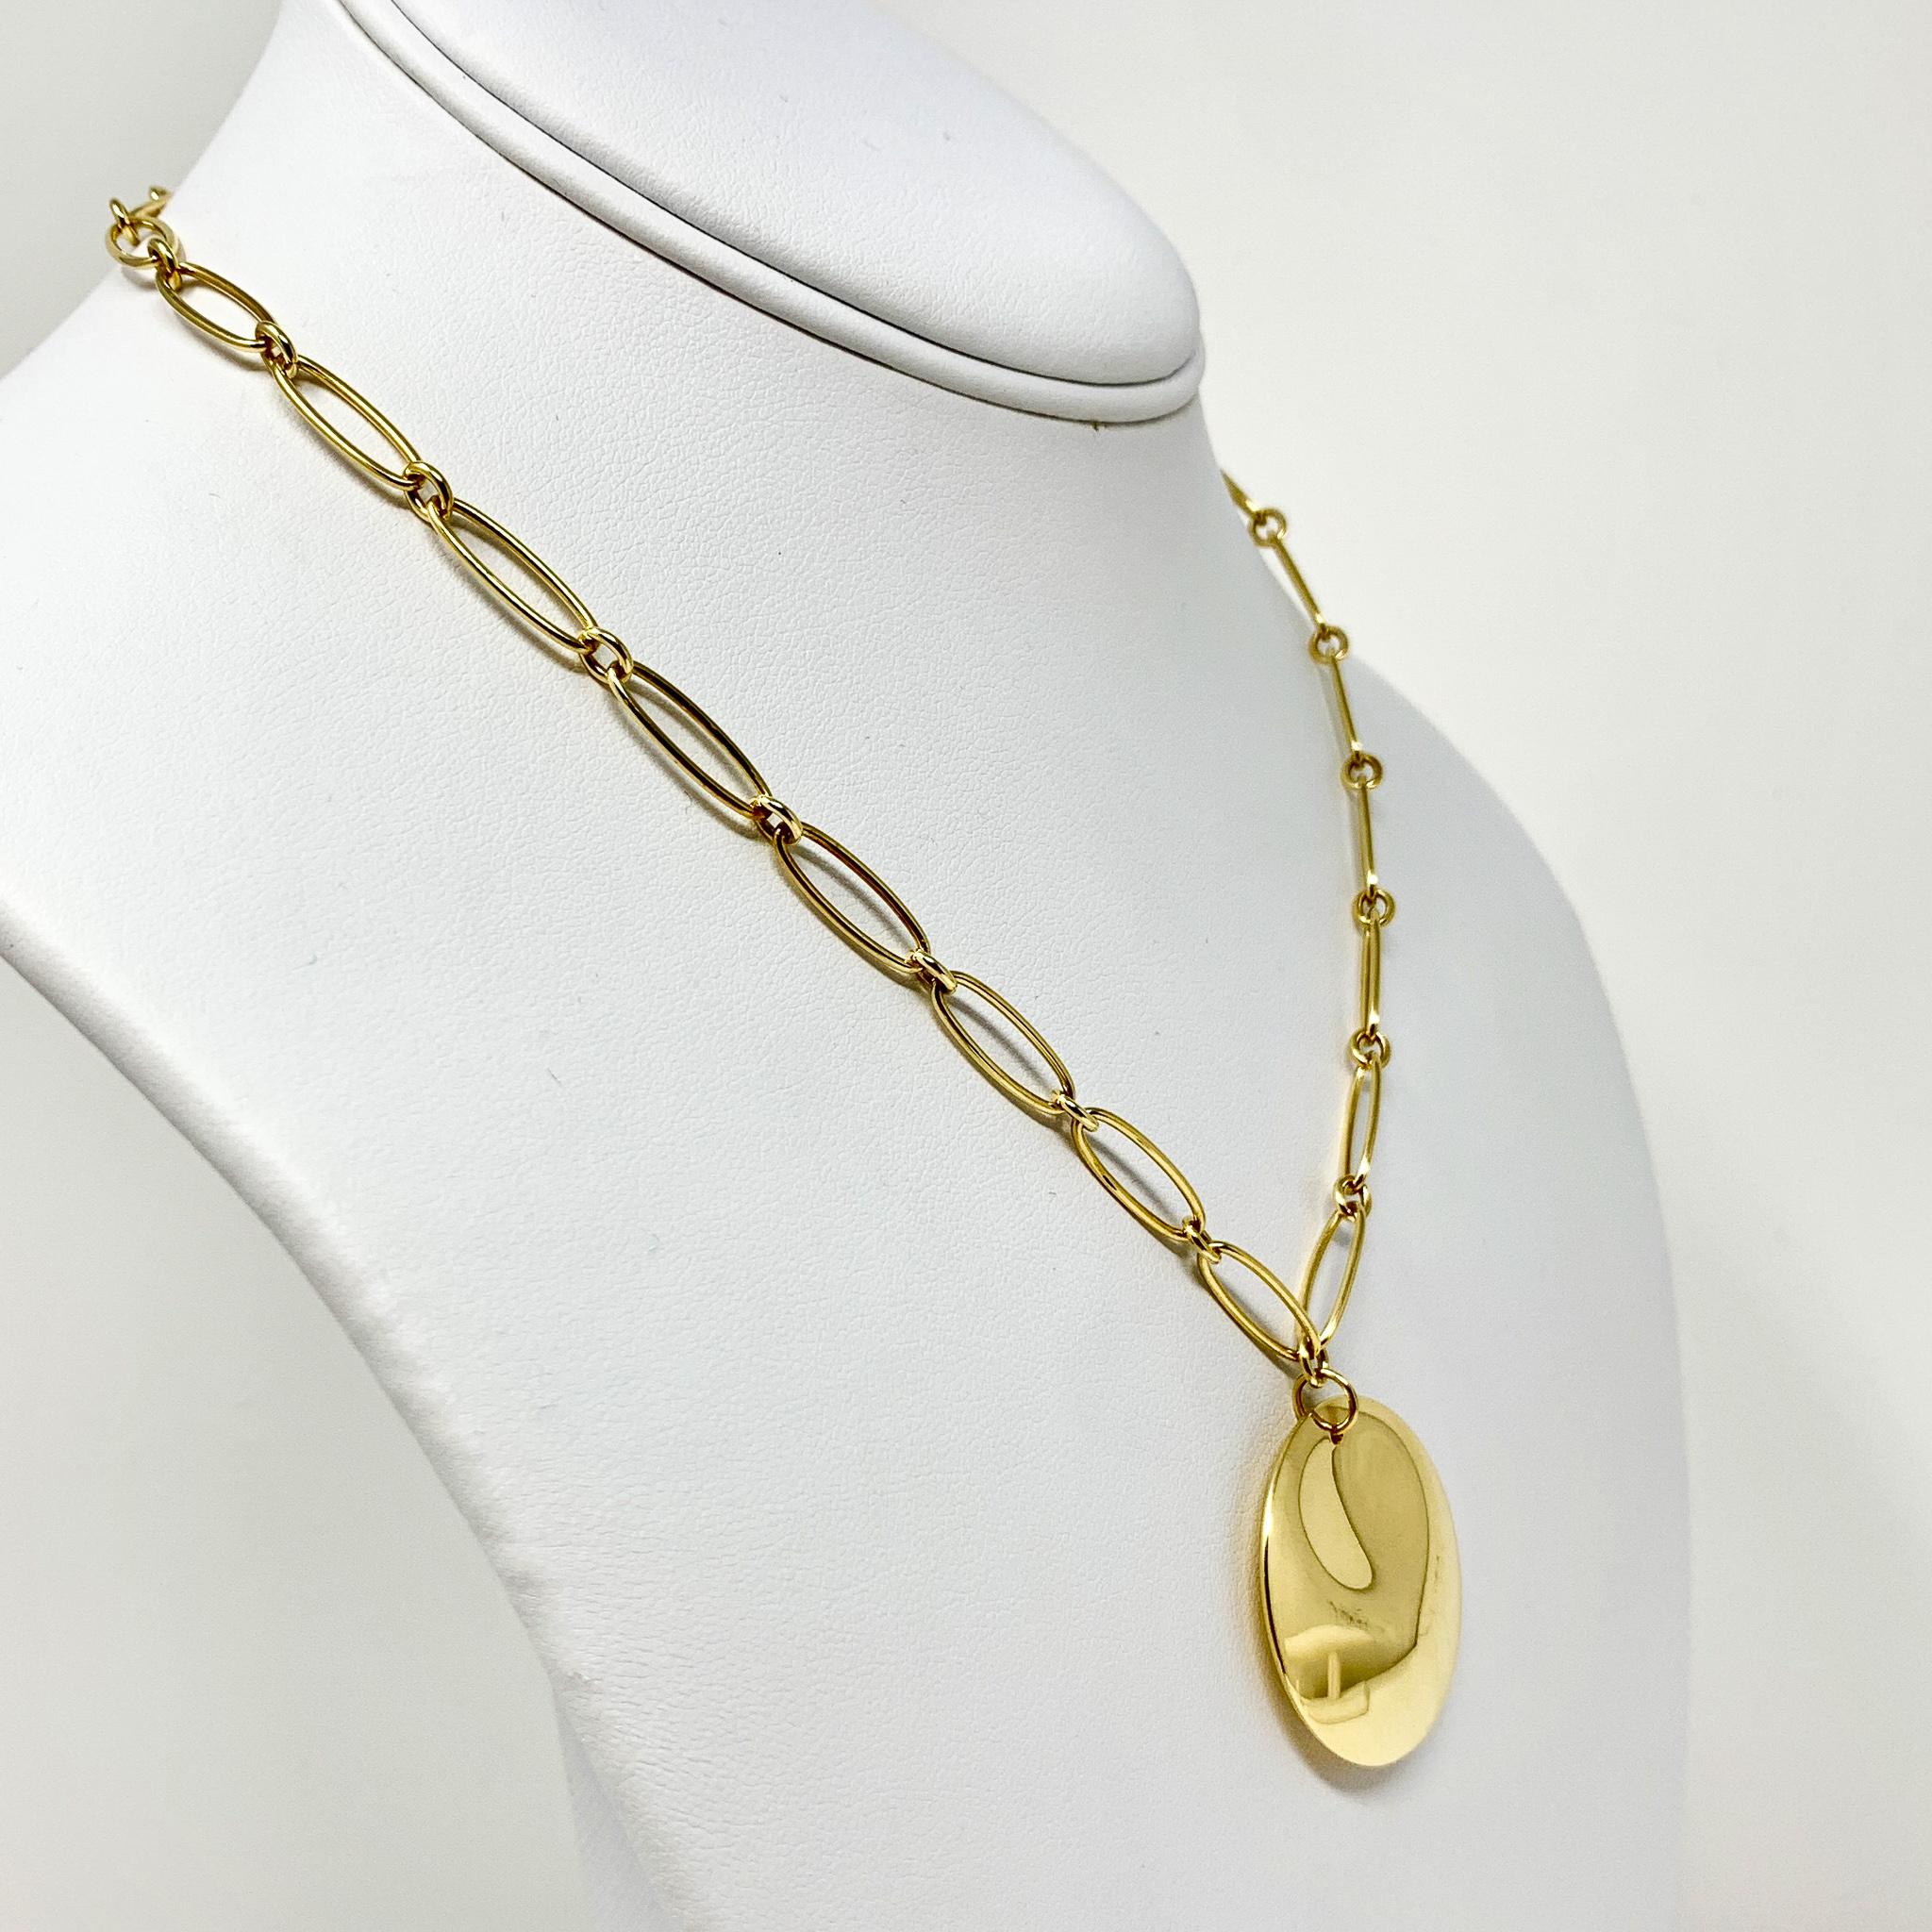 Tiffany & Co. Elsa Peretti 18k Yellow Gold Round Pendant Necklace 16.5